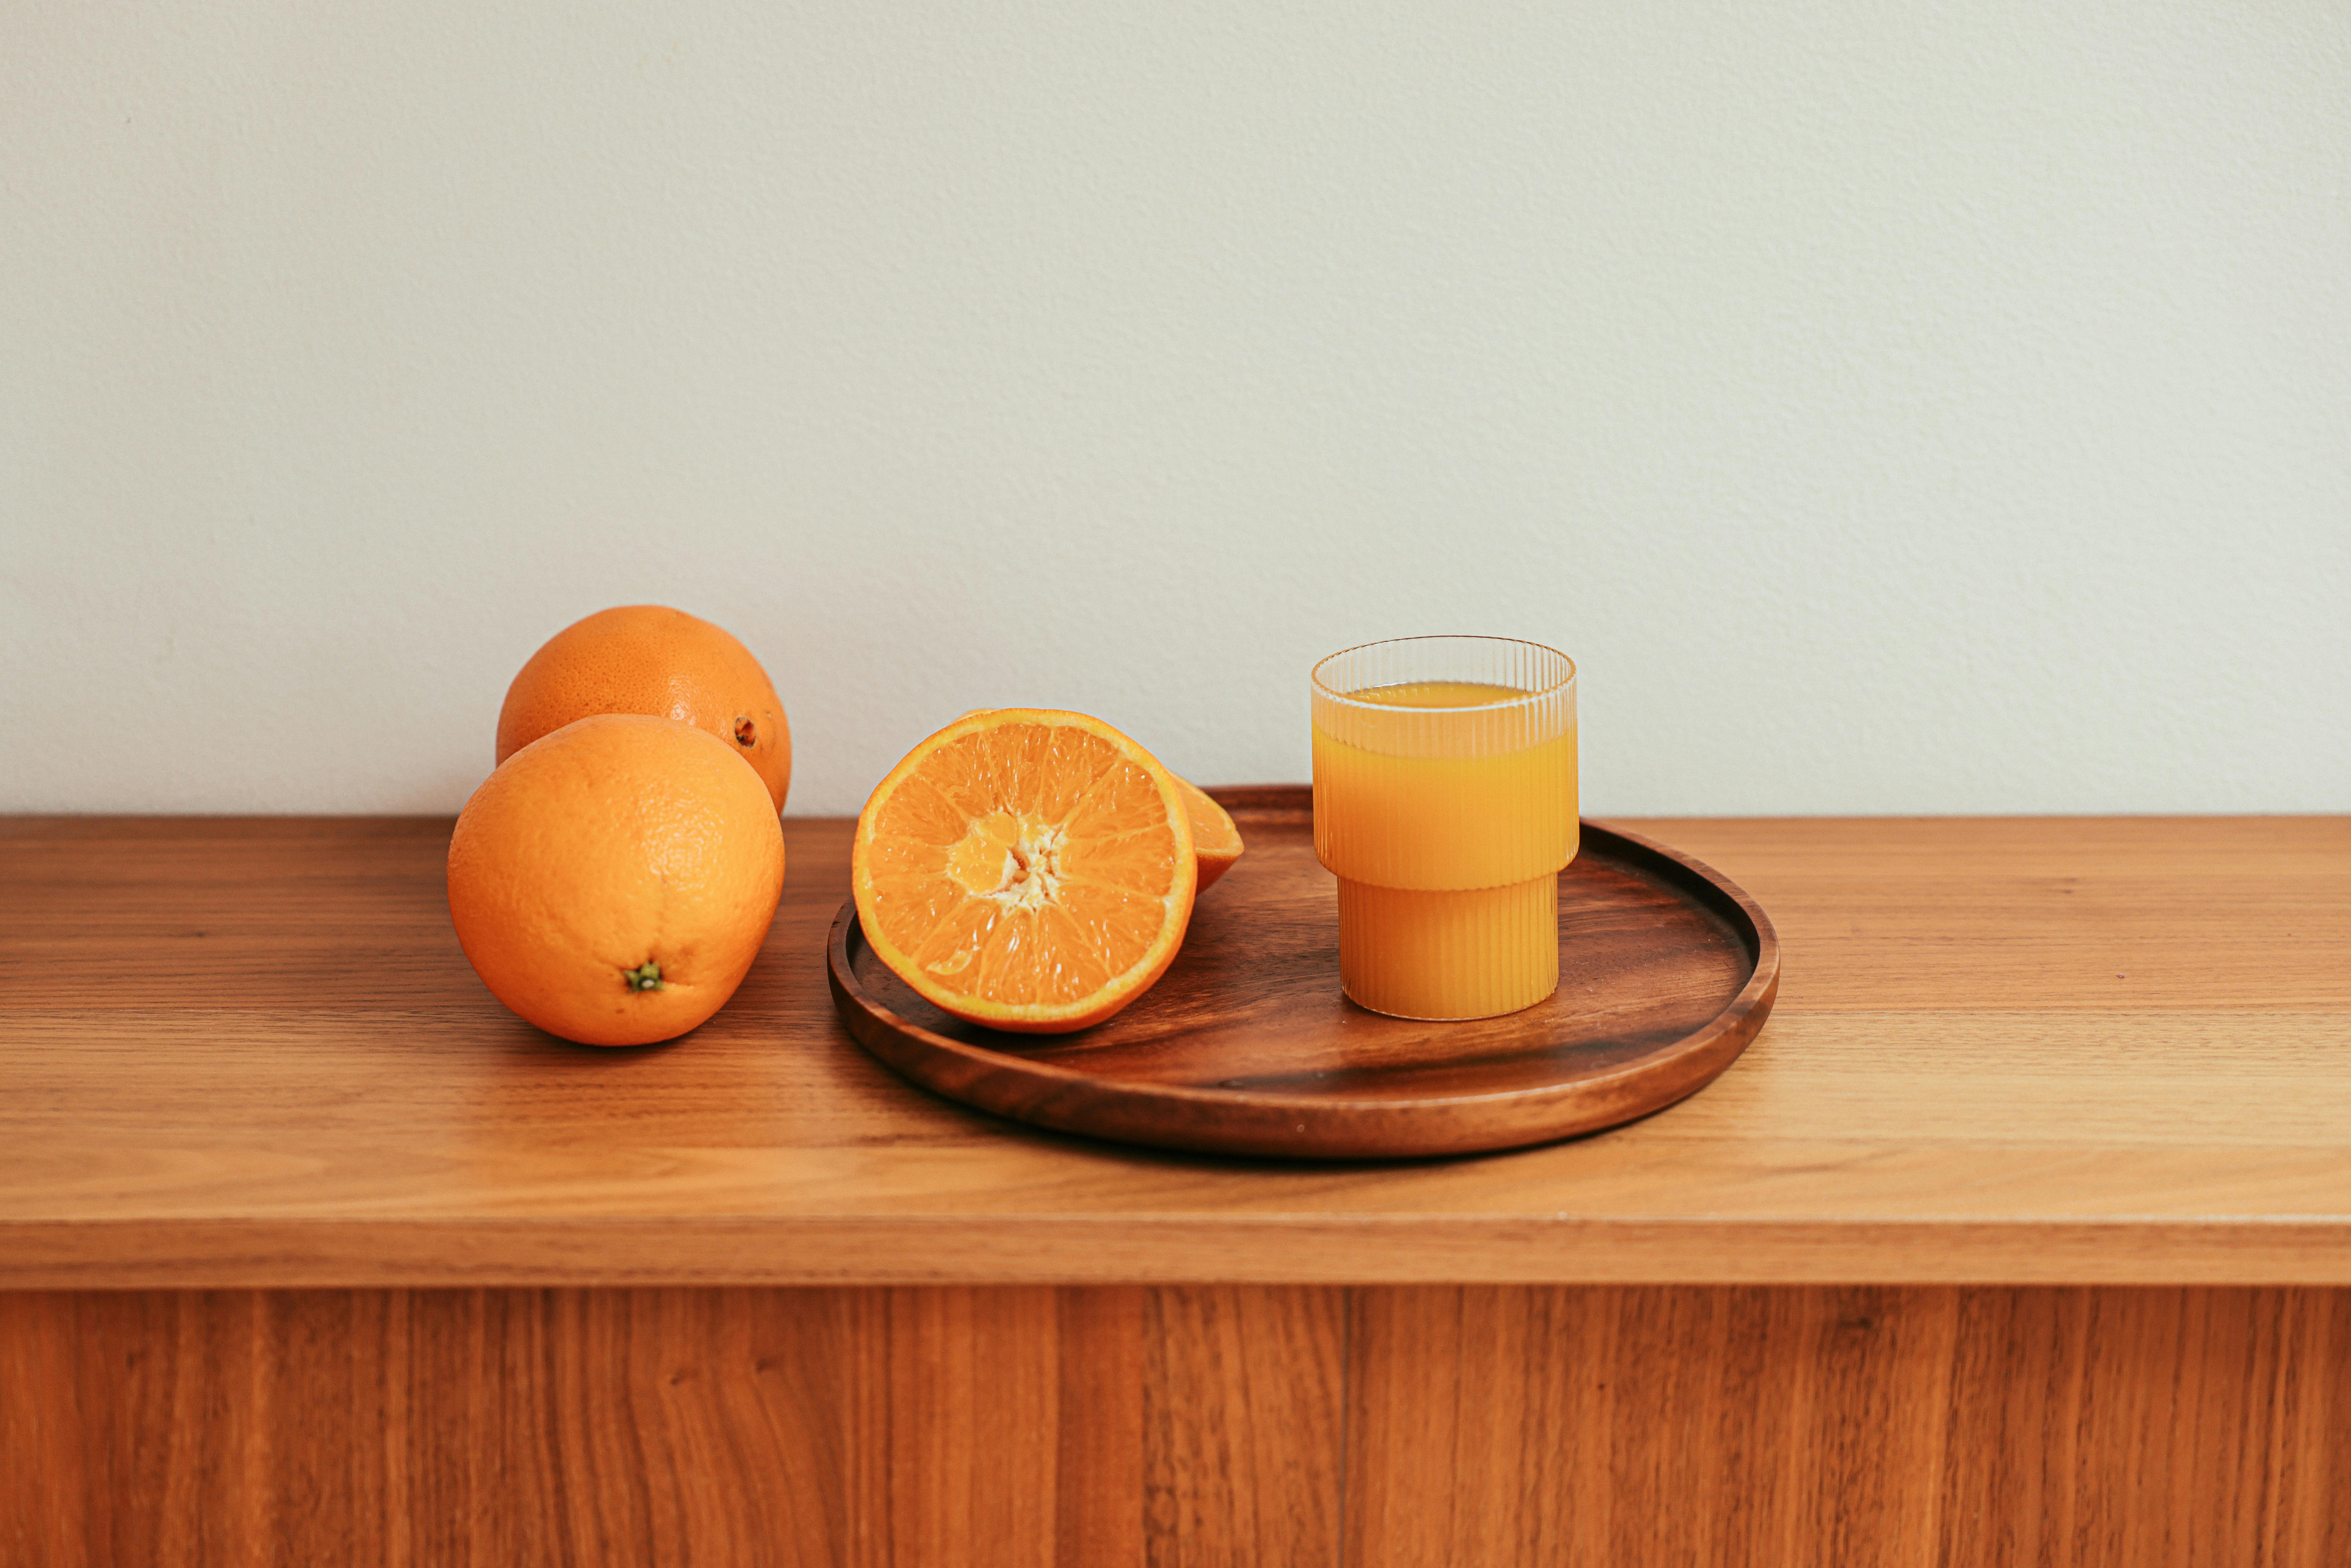 Fresh Orange Juice Jar Old Wooden Table Selective Focus Stock Photo by  ©JulijaDM 223976668